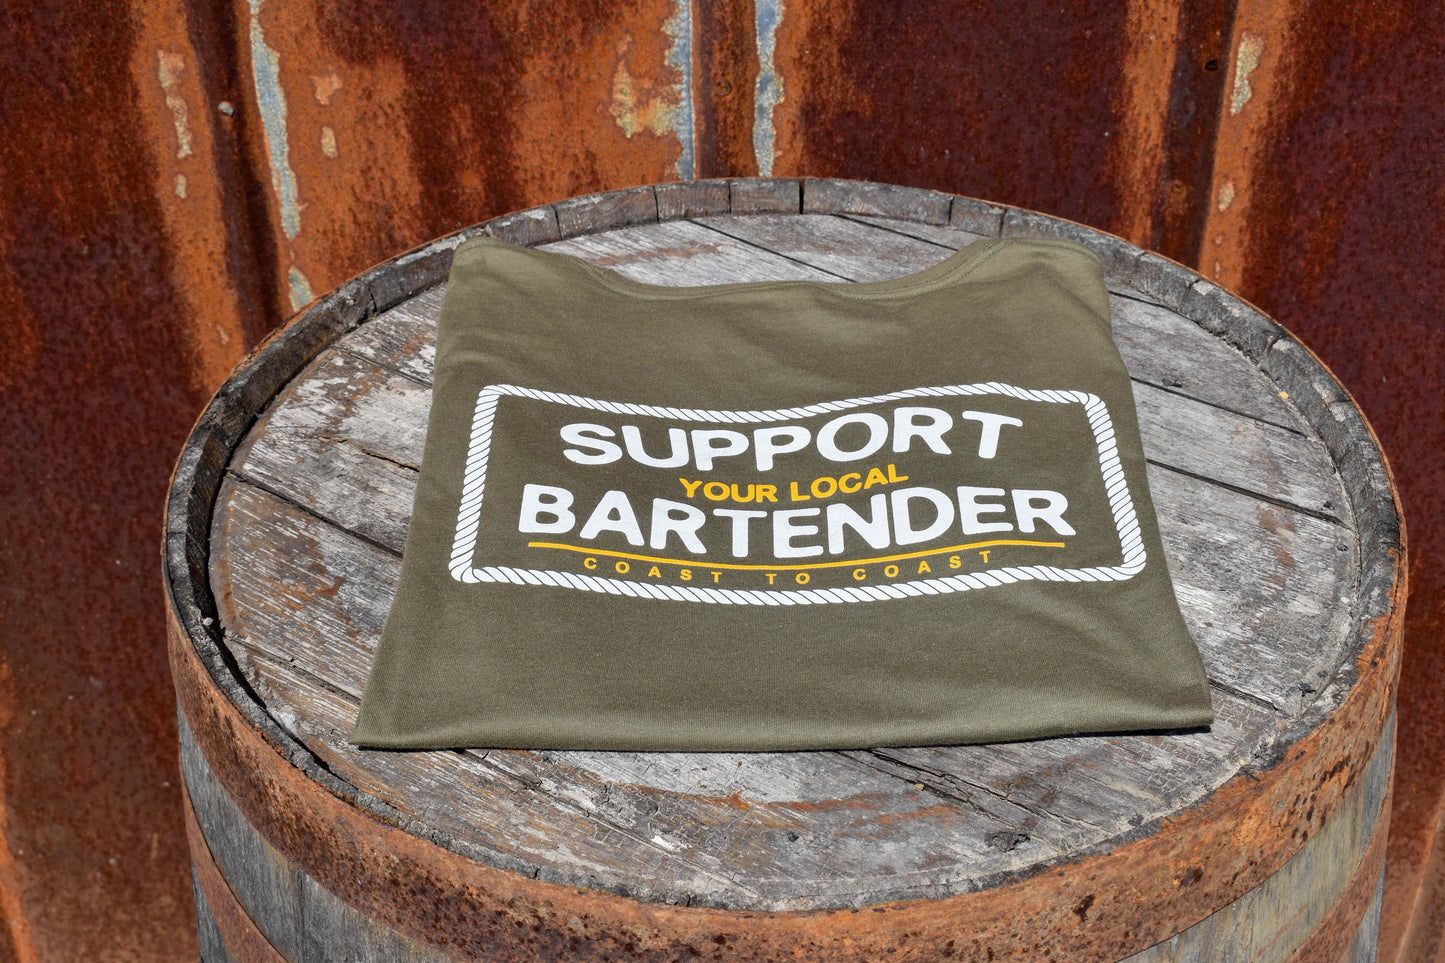 Burley Oak Dark Seas "Support Your Local Bartender" Women's T-Shirt